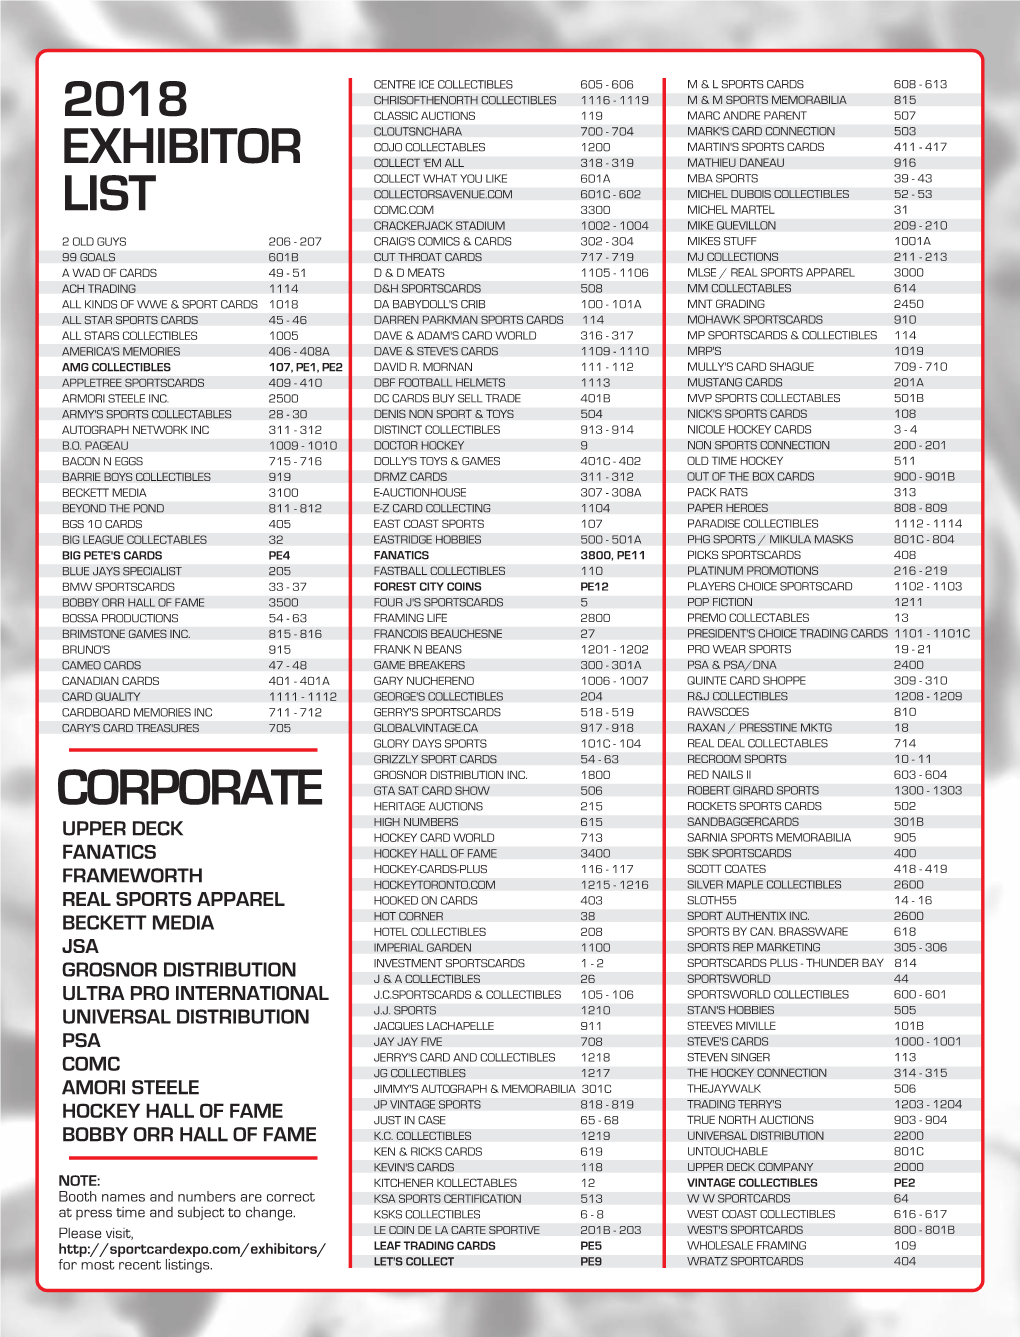 2018 Exhibitor List Corporate